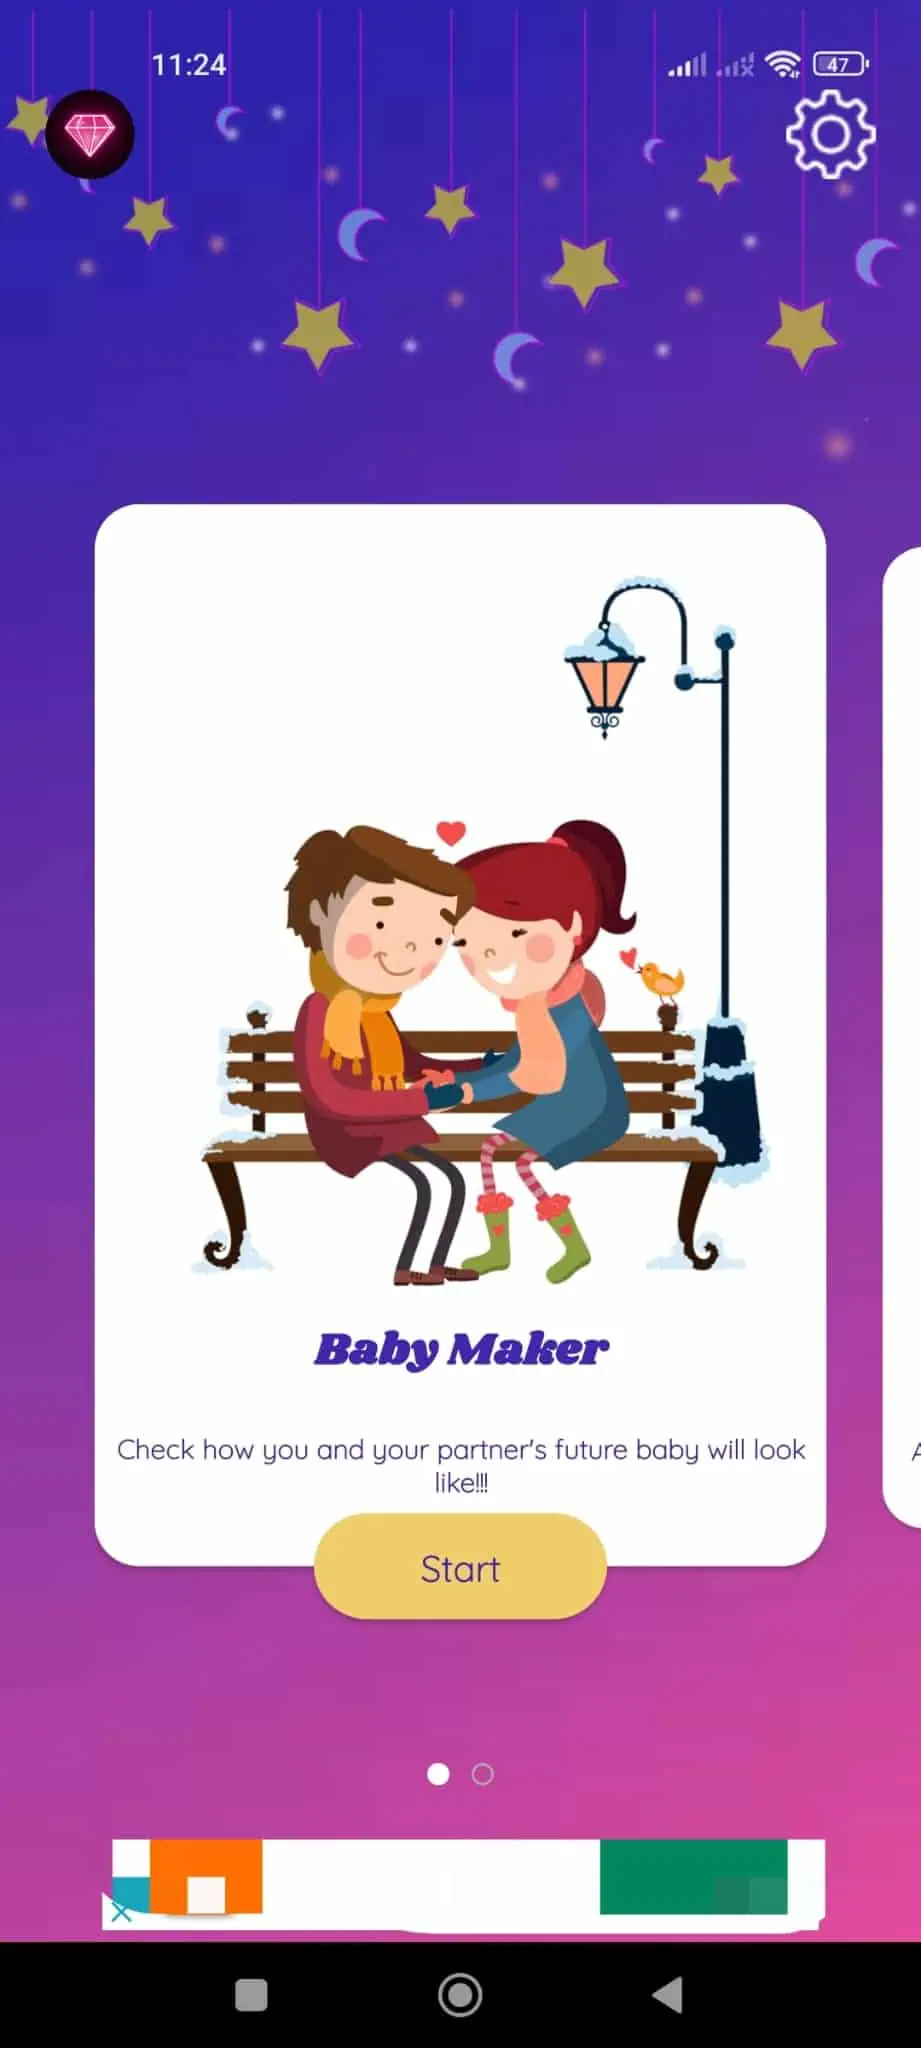 Future baby face predictor – Applications sur Google Play